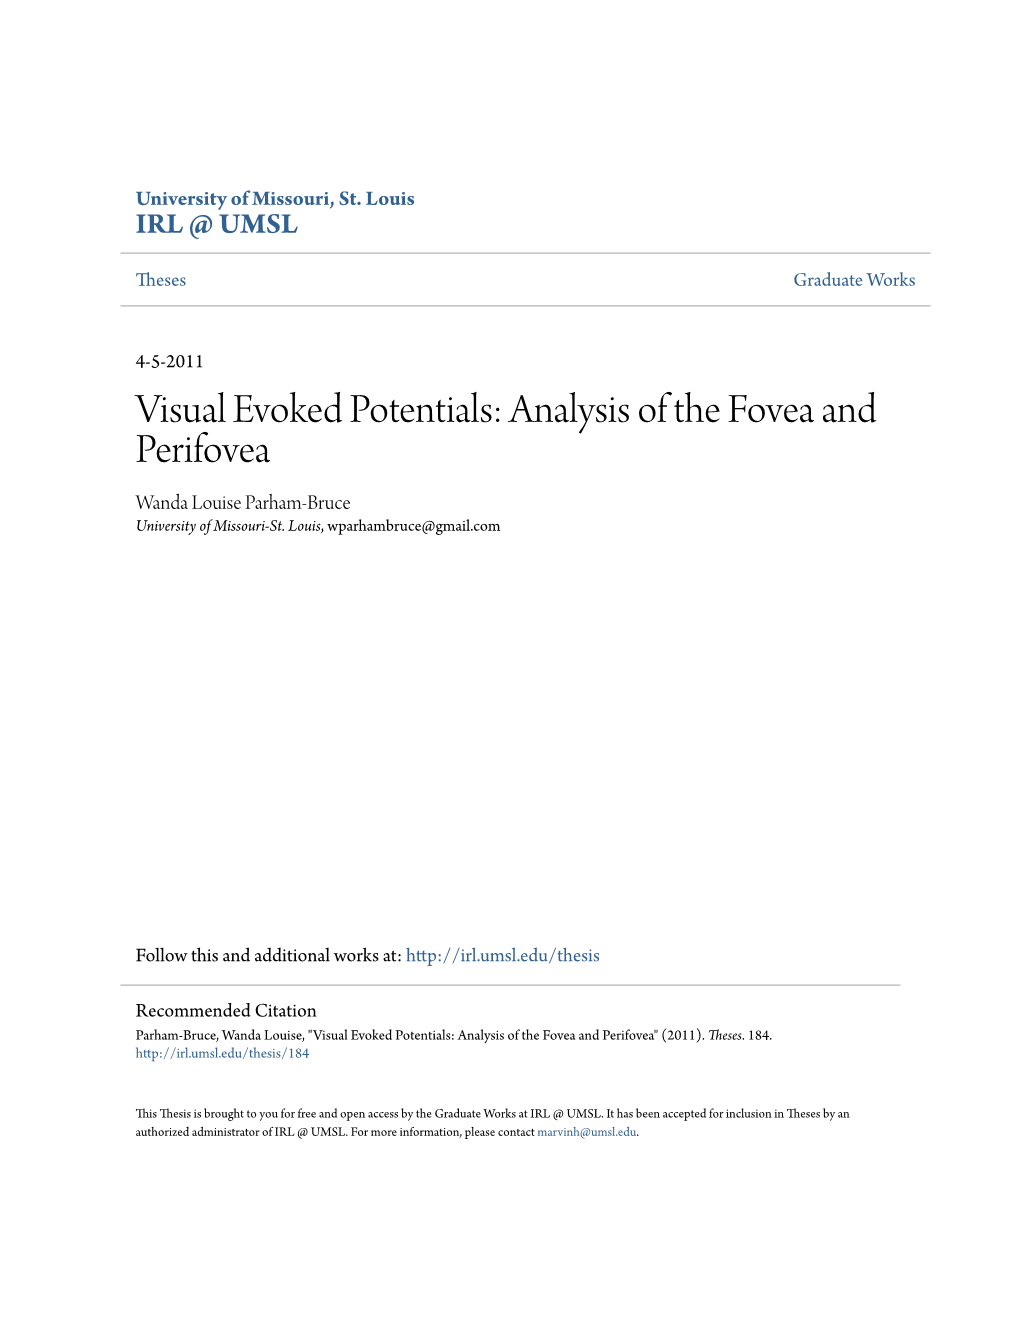 Visual Evoked Potentials: Analysis of the Fovea and Perifovea Wanda Louise Parham-Bruce University of Missouri-St